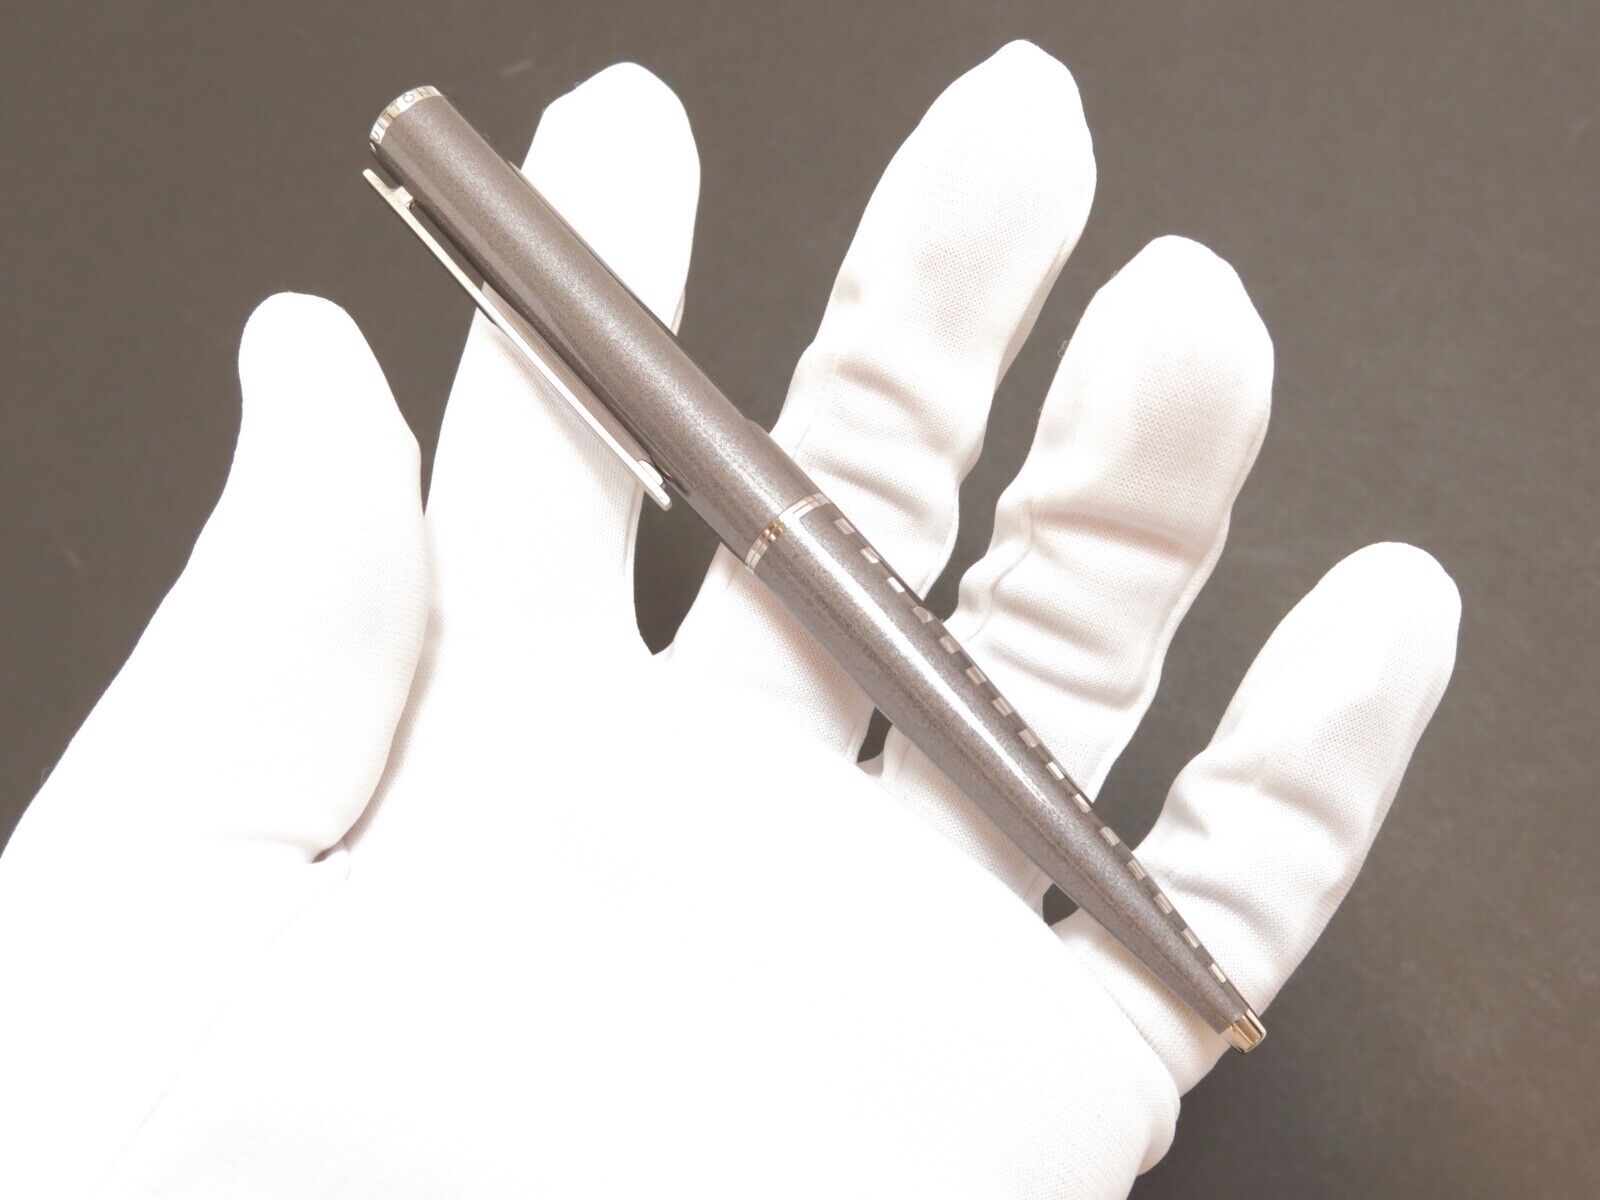 Auth LOUIS VUITTON Jet Wrap Ballpoint Pen Replaced Ballpoint Pen Refill 18665116